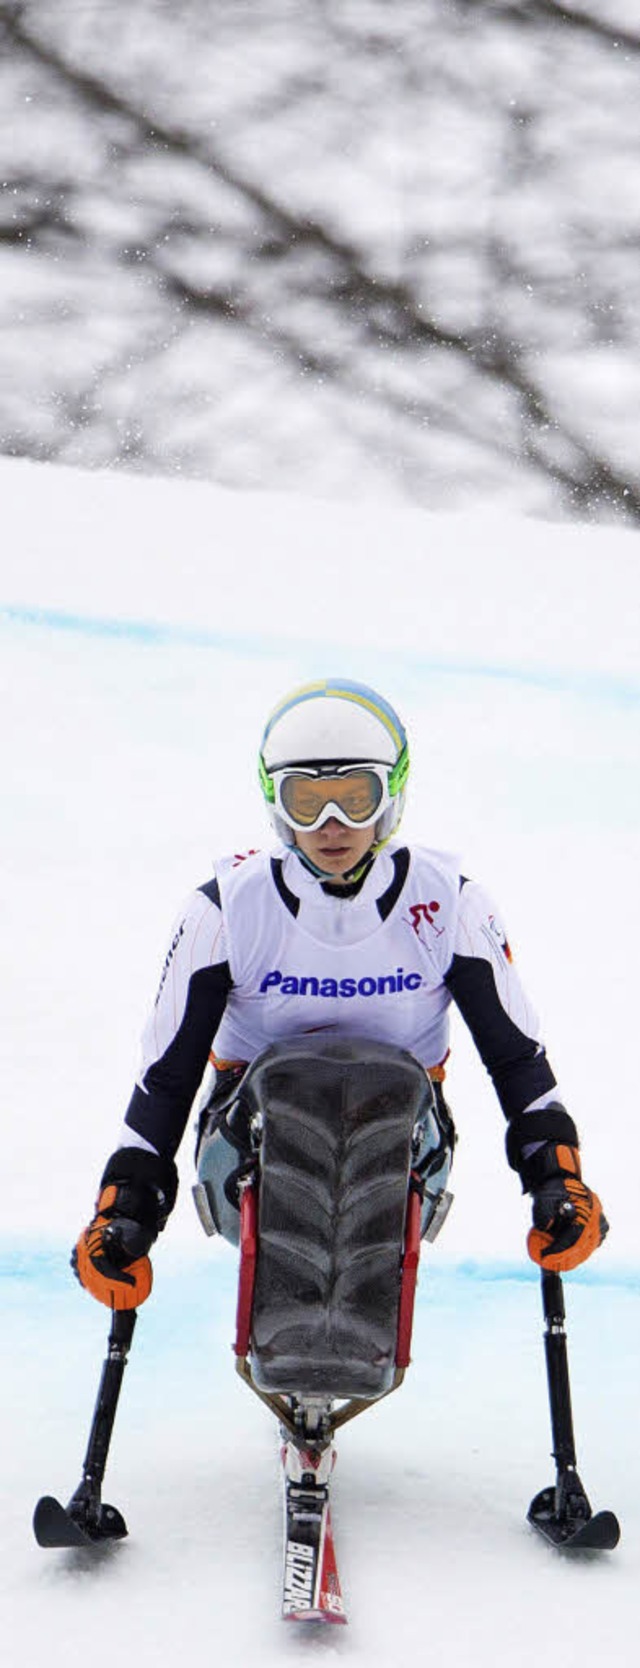 Goldmedaillen-Gewinnerin Anna Schaffelhuber im Einsatz.  | Foto: dpa